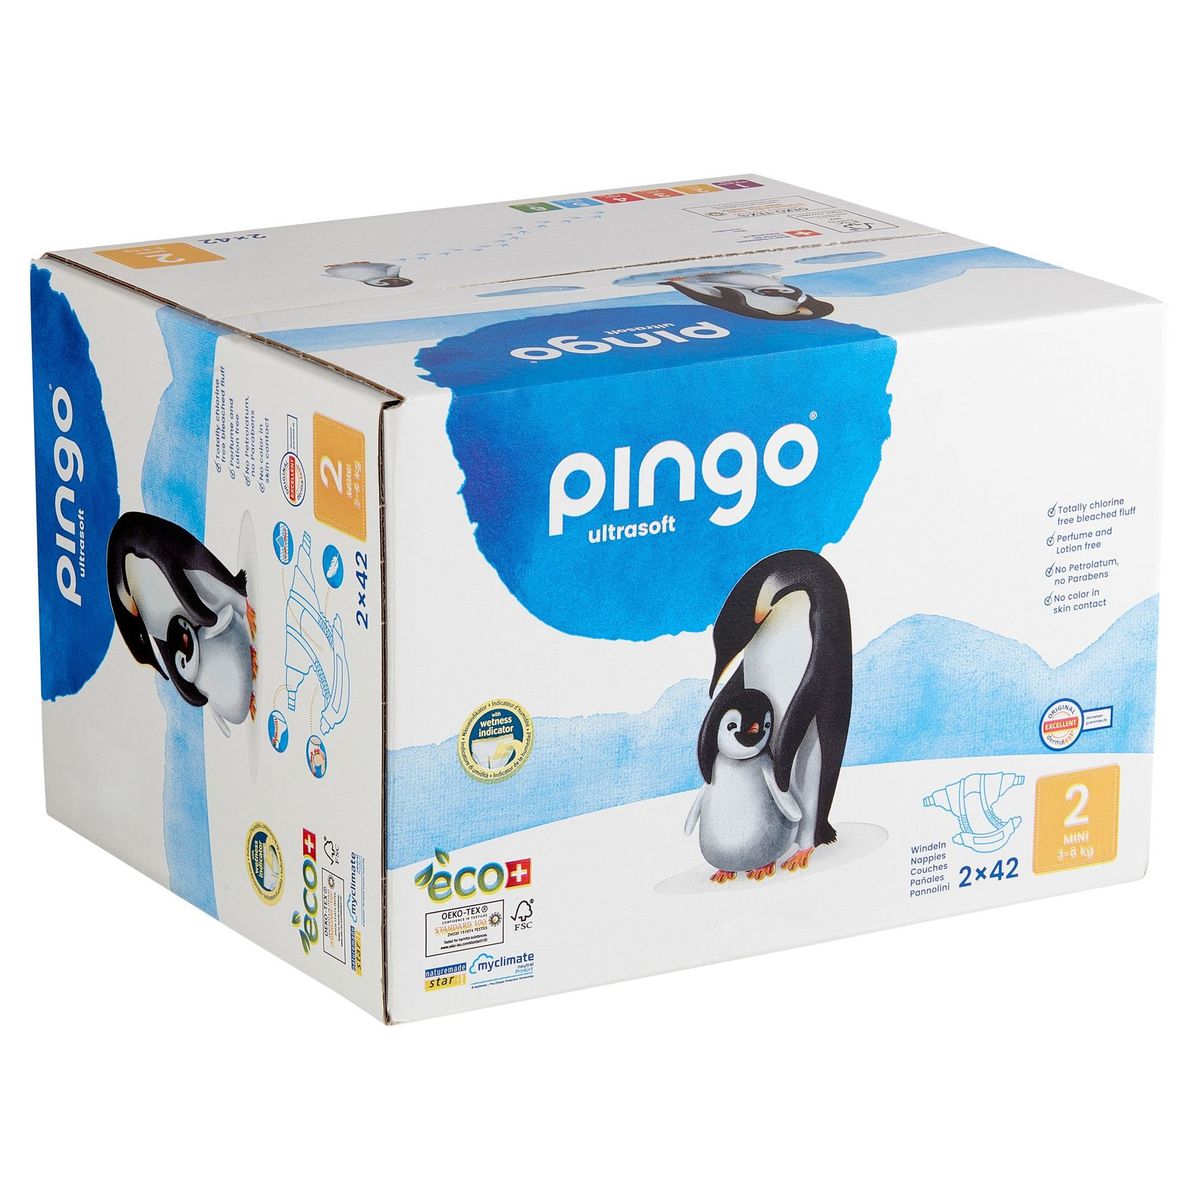 Pingo Ultrasoft 2 Mini 3-6 kg 2 x 42 Pièces